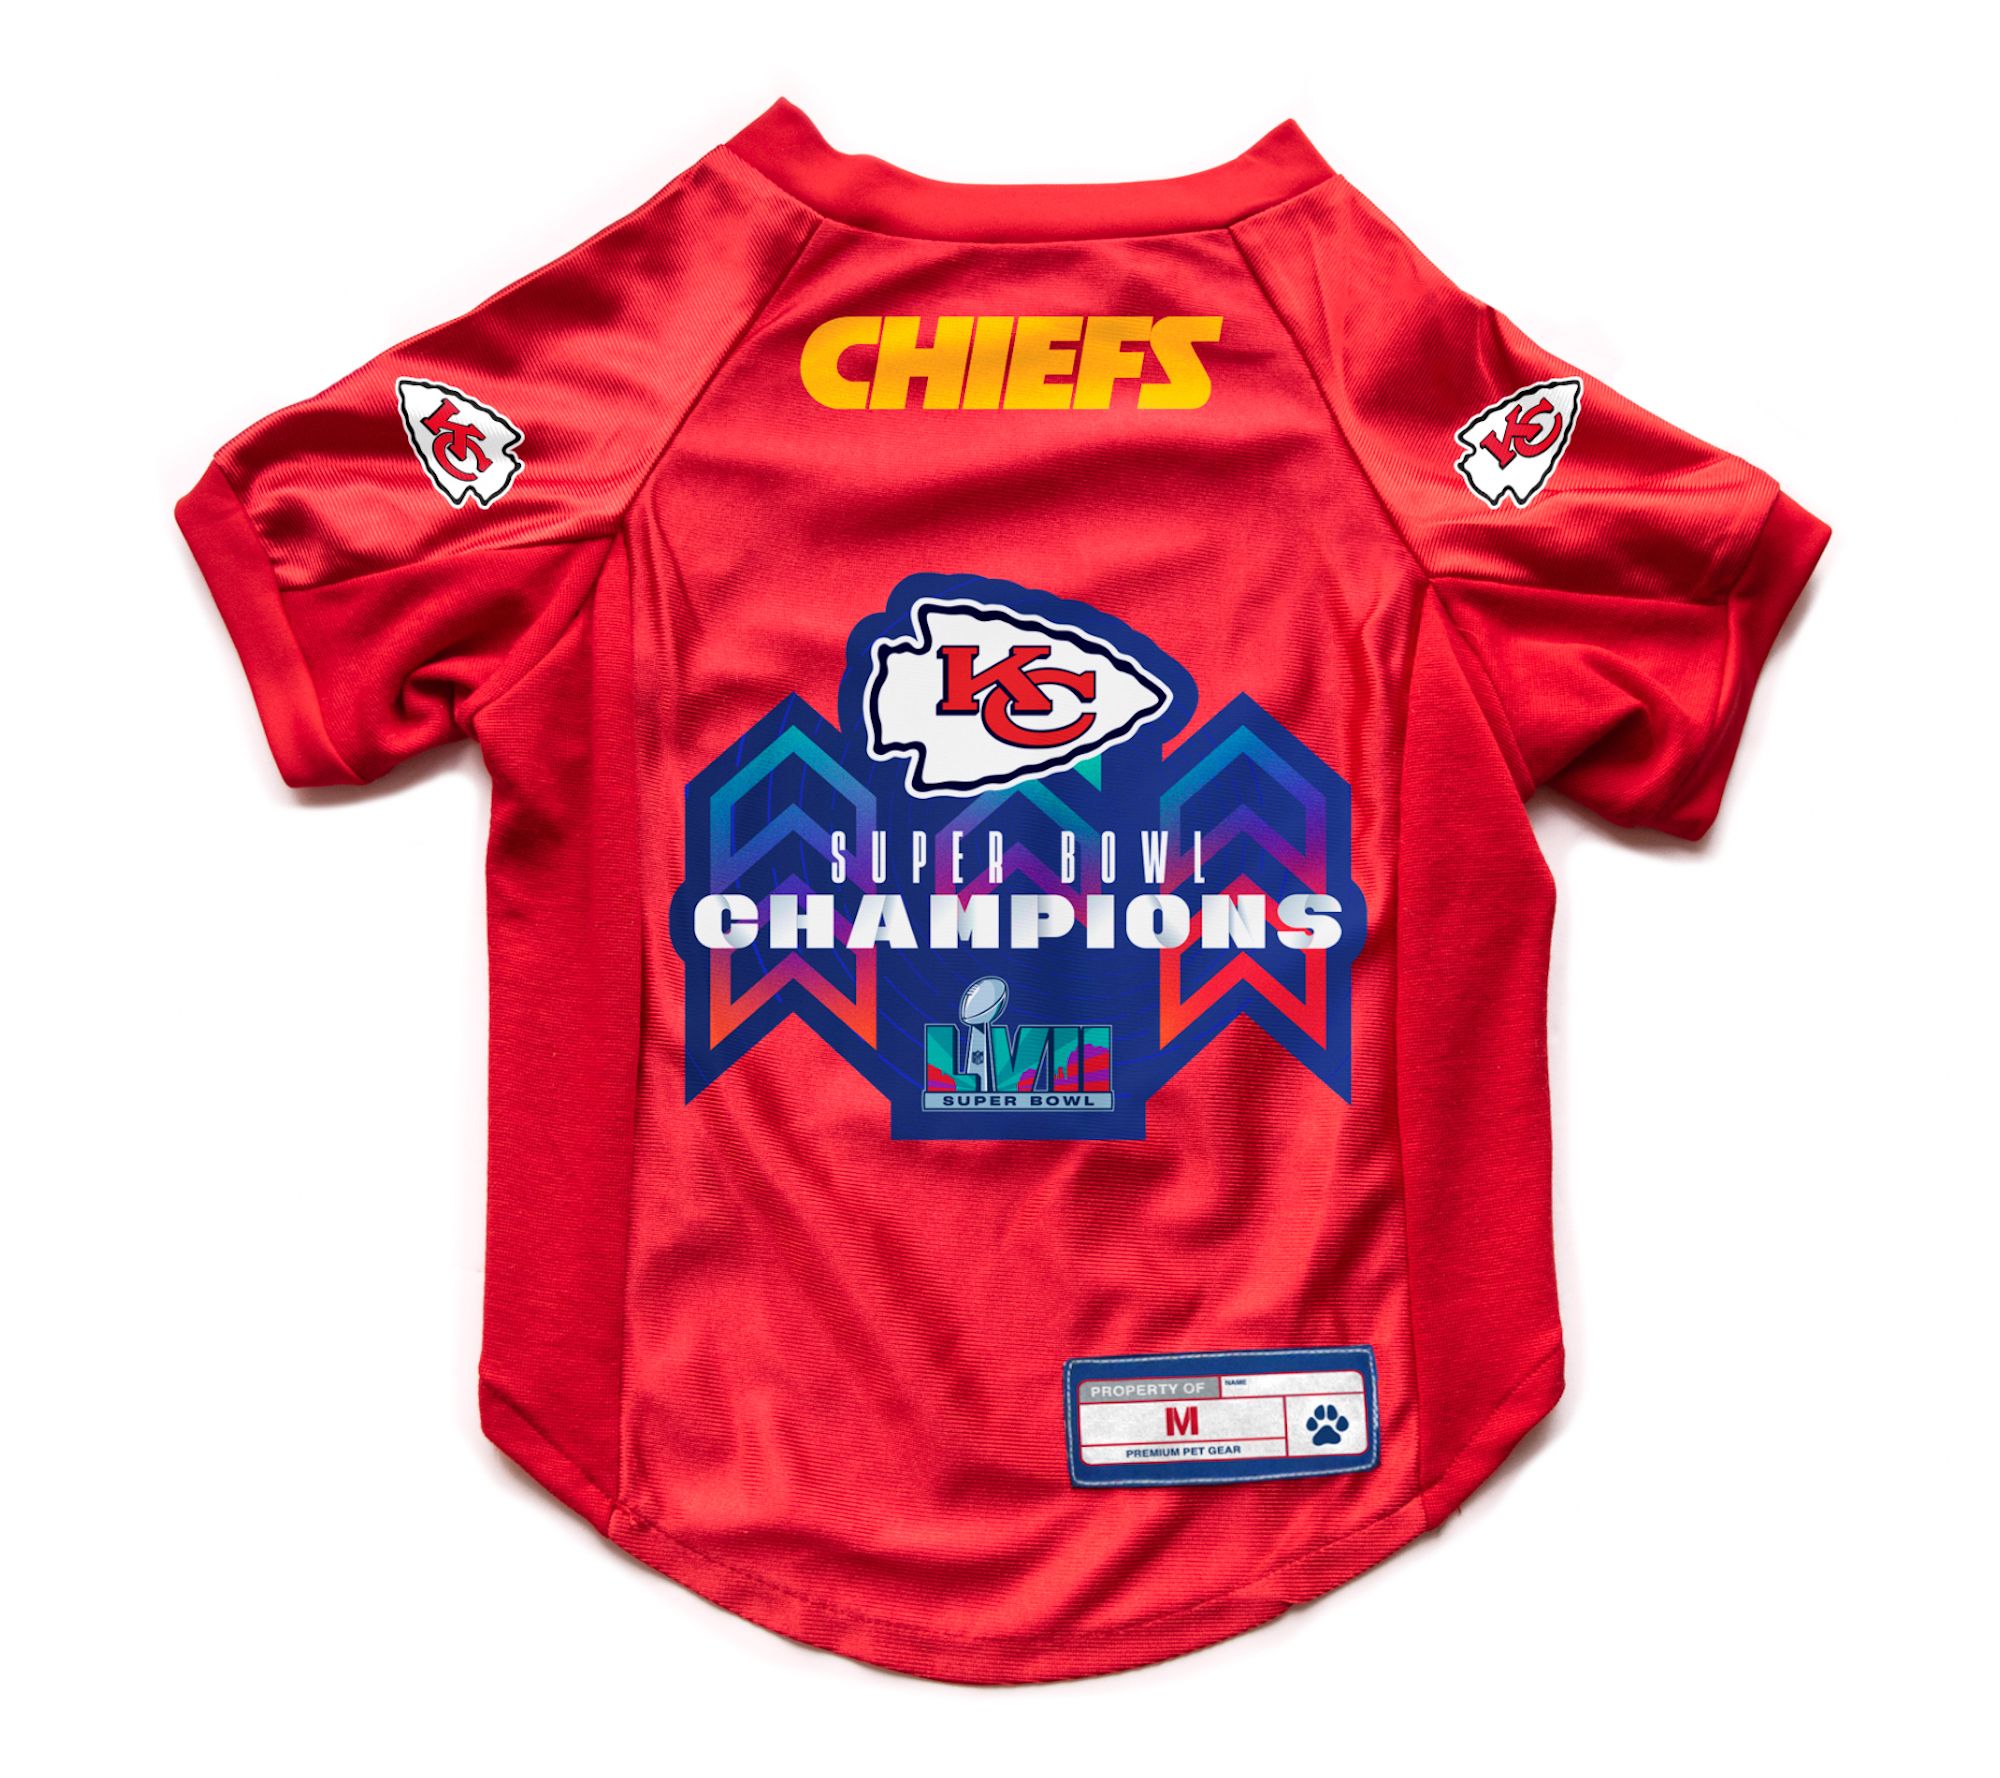 Kansas City Chiefs Super Bowl T-Shirts, hats, jerseys, hoodies